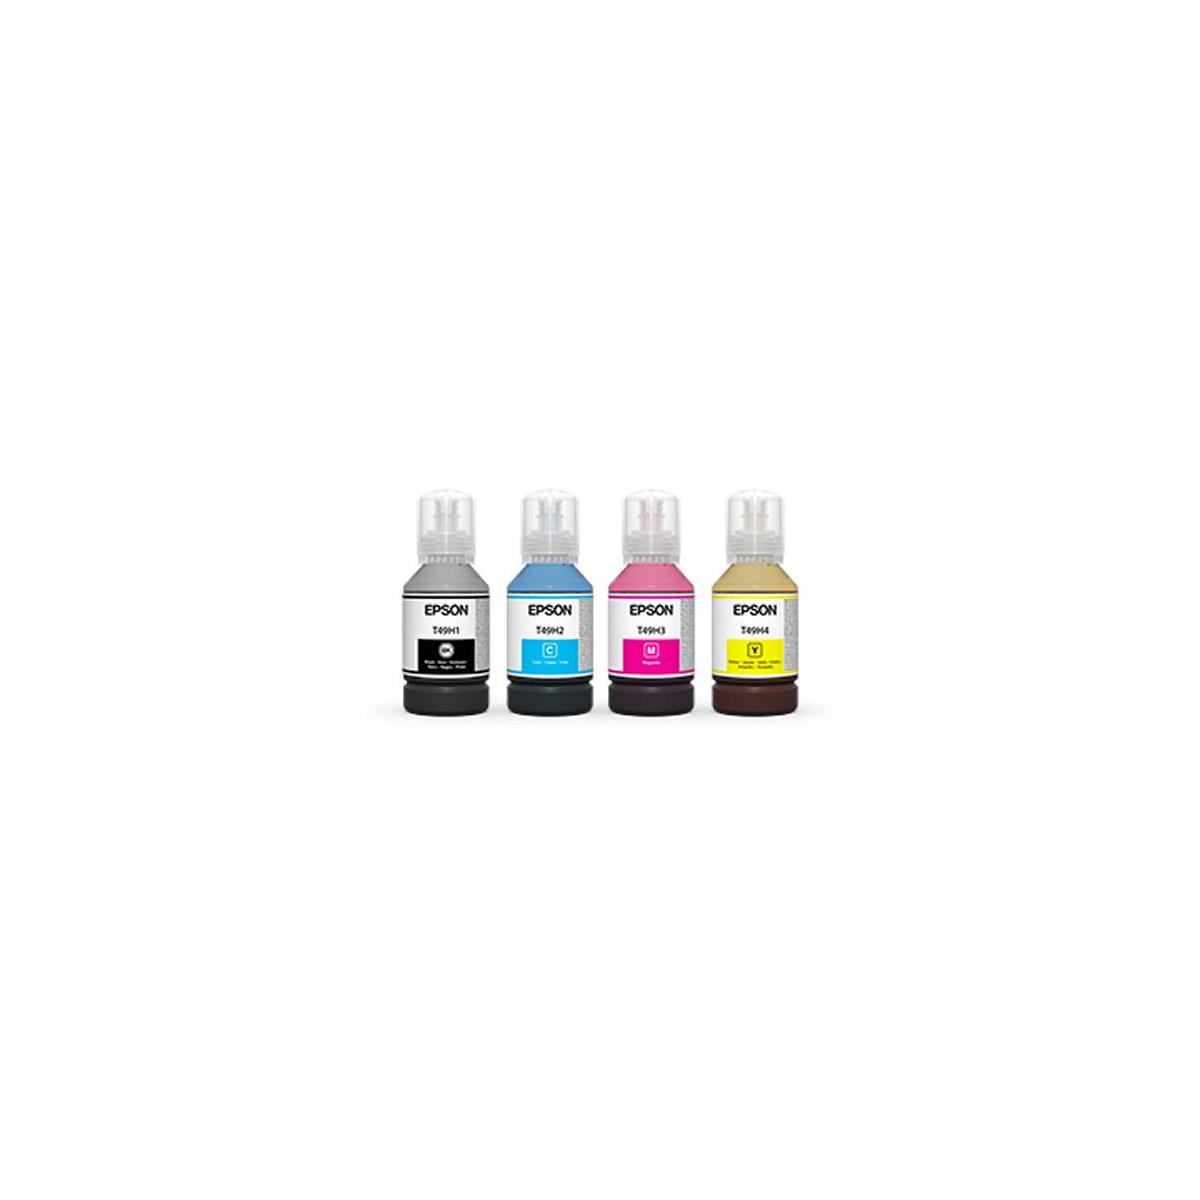 

Epson T49H Ink Bottle for SureColor T3170x Printer, Magenta, 140ml